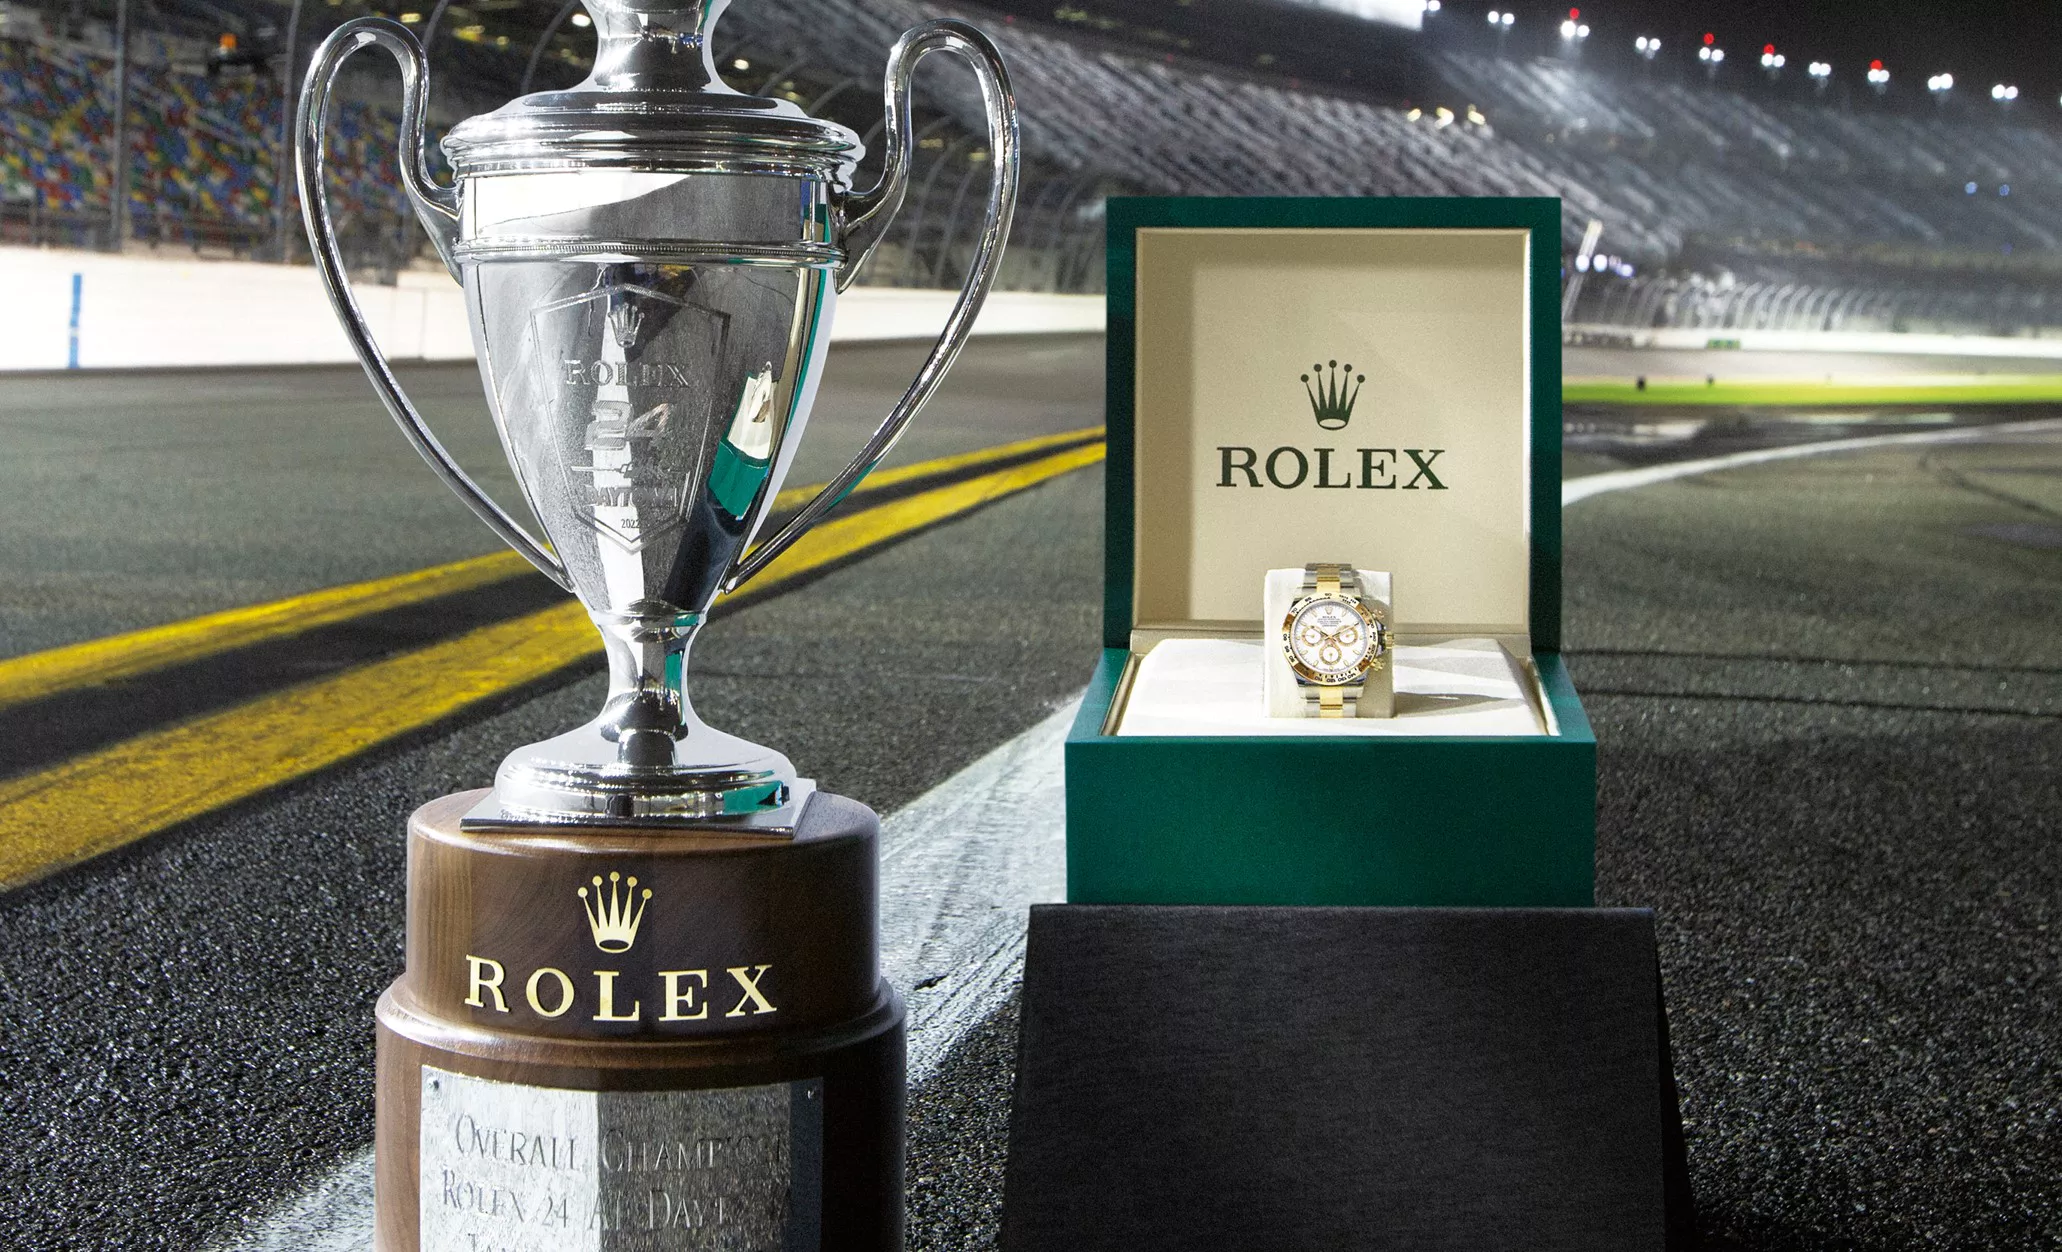 aria-label="Rolex Oyster Perpetual Daytona race celebration 4"